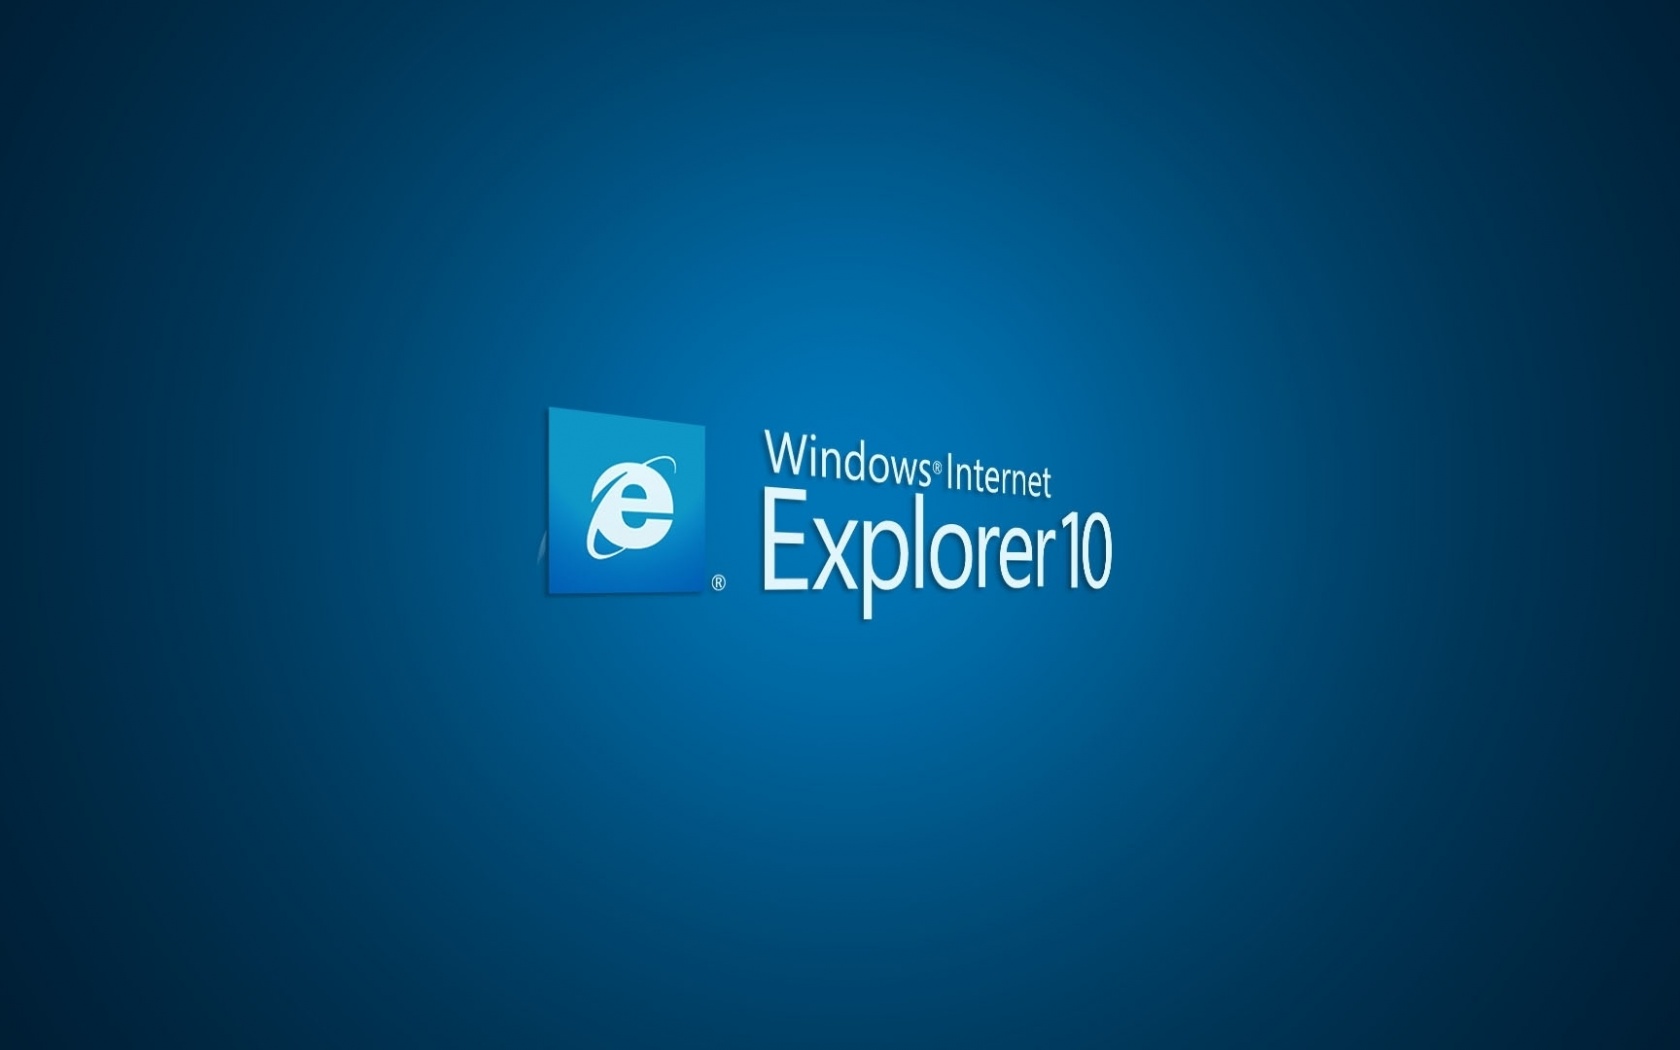 Microsoft Windows Inter Explorer Desktop Pc And Mac Wallpaper